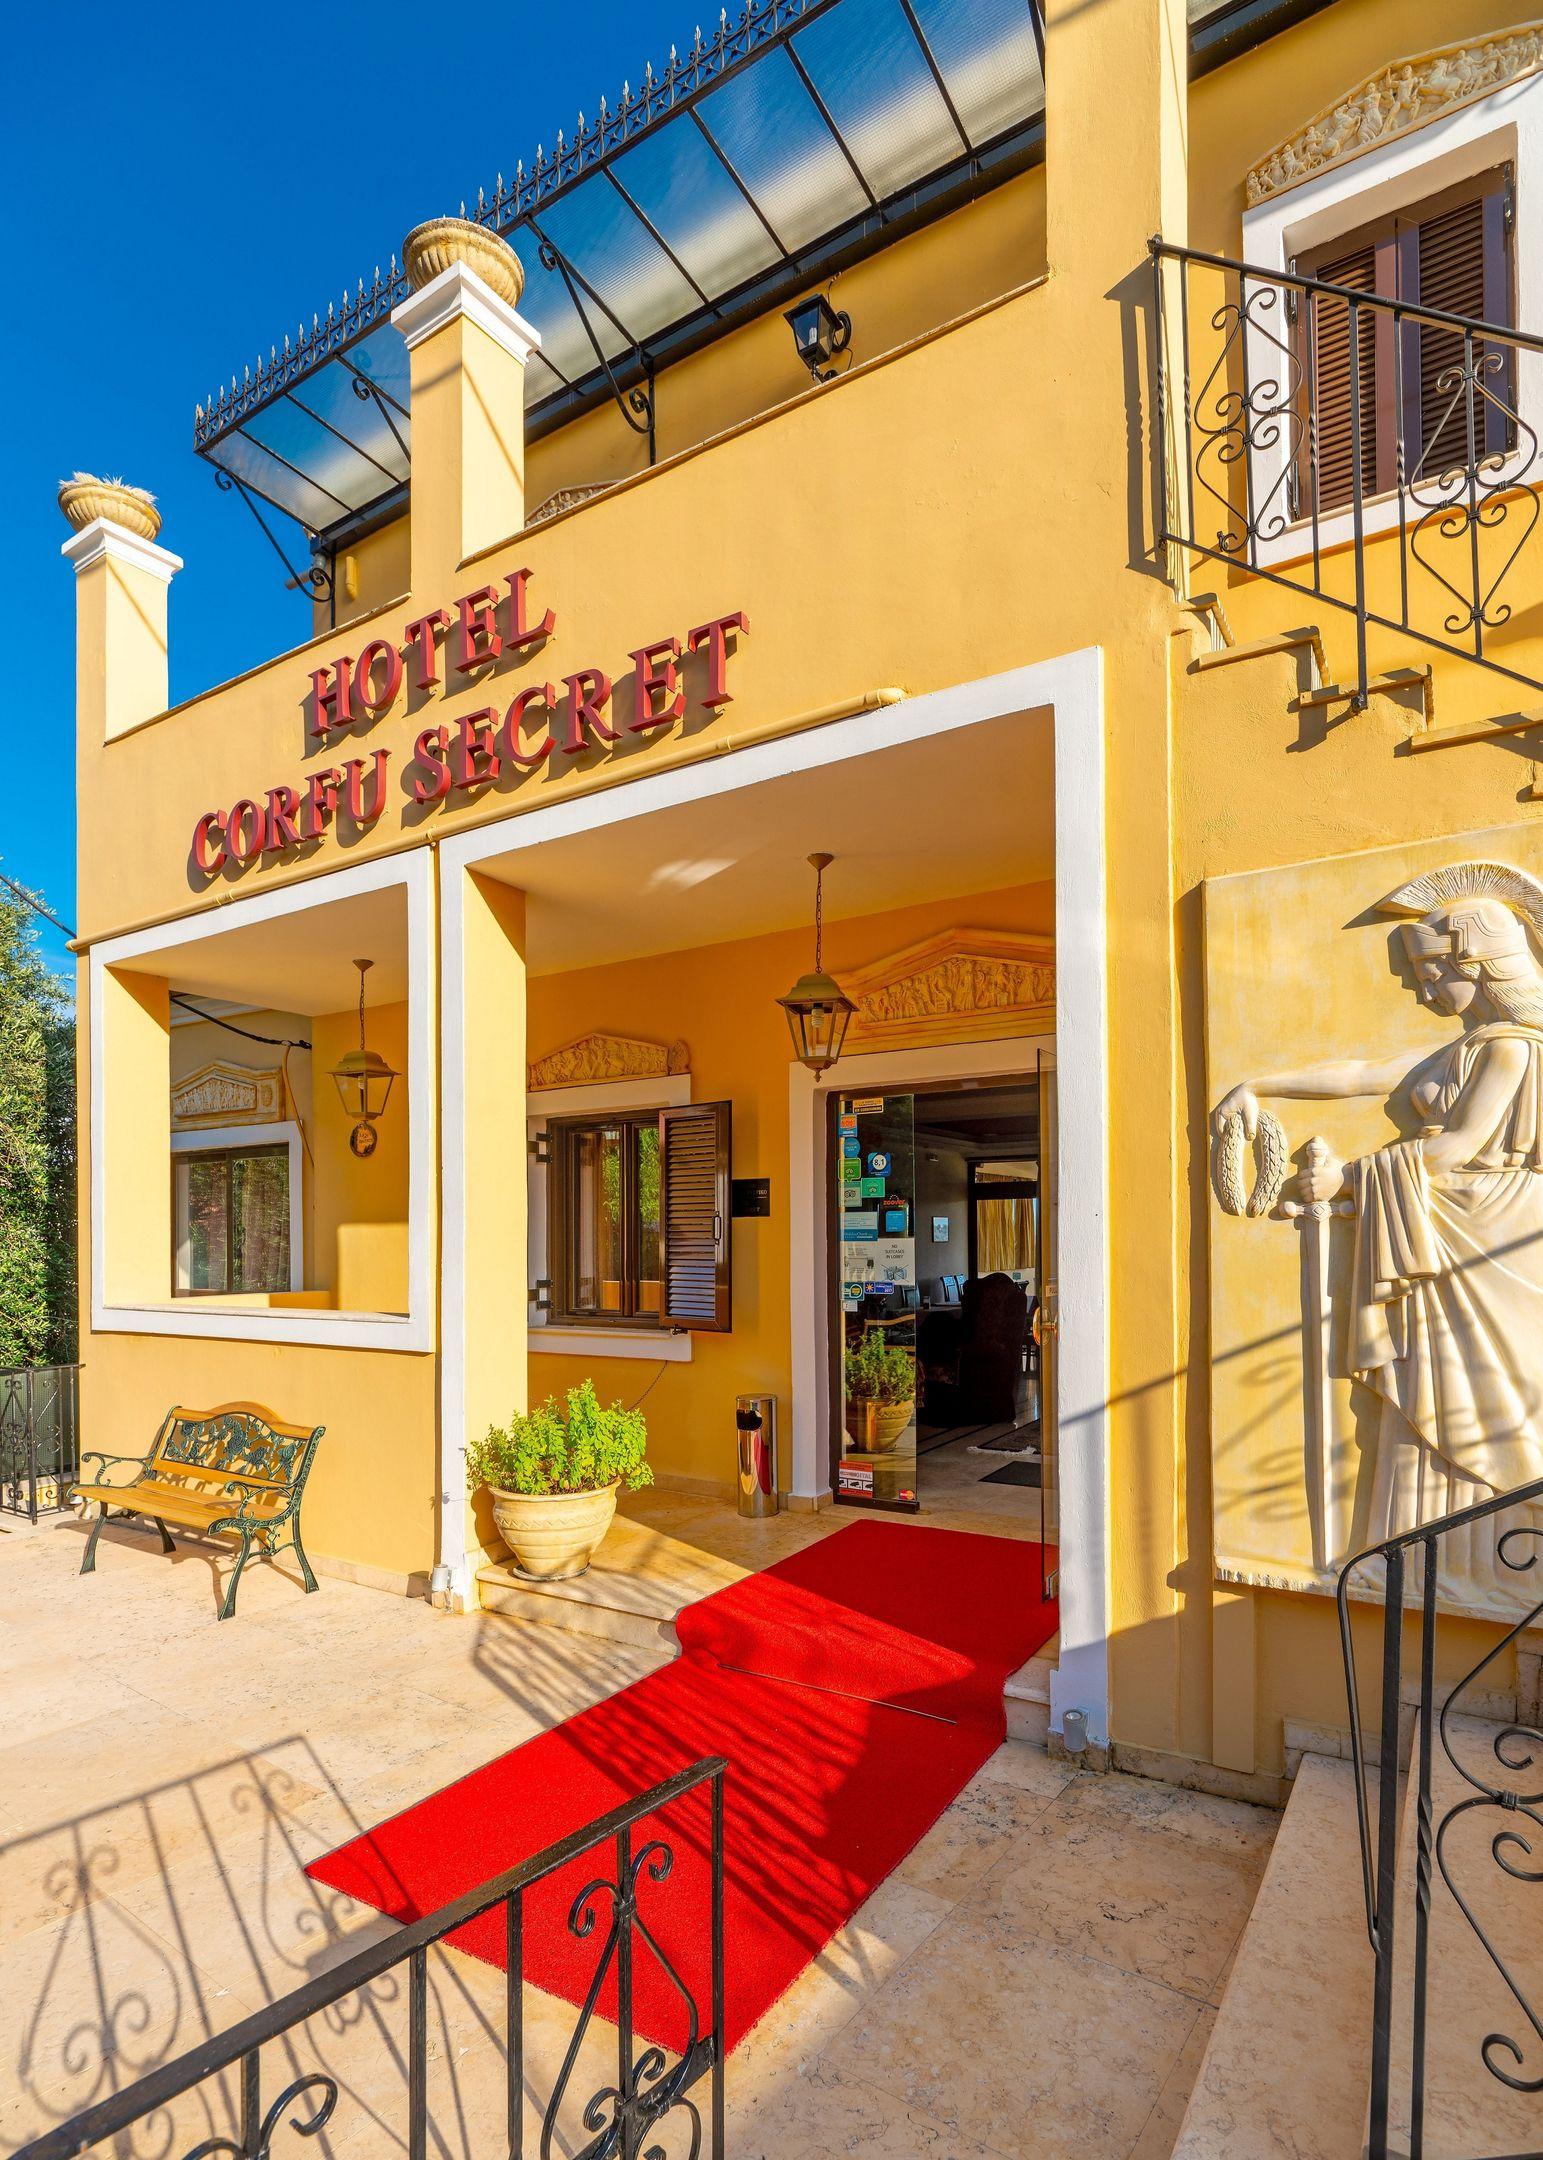 Hotel Corfu Secret